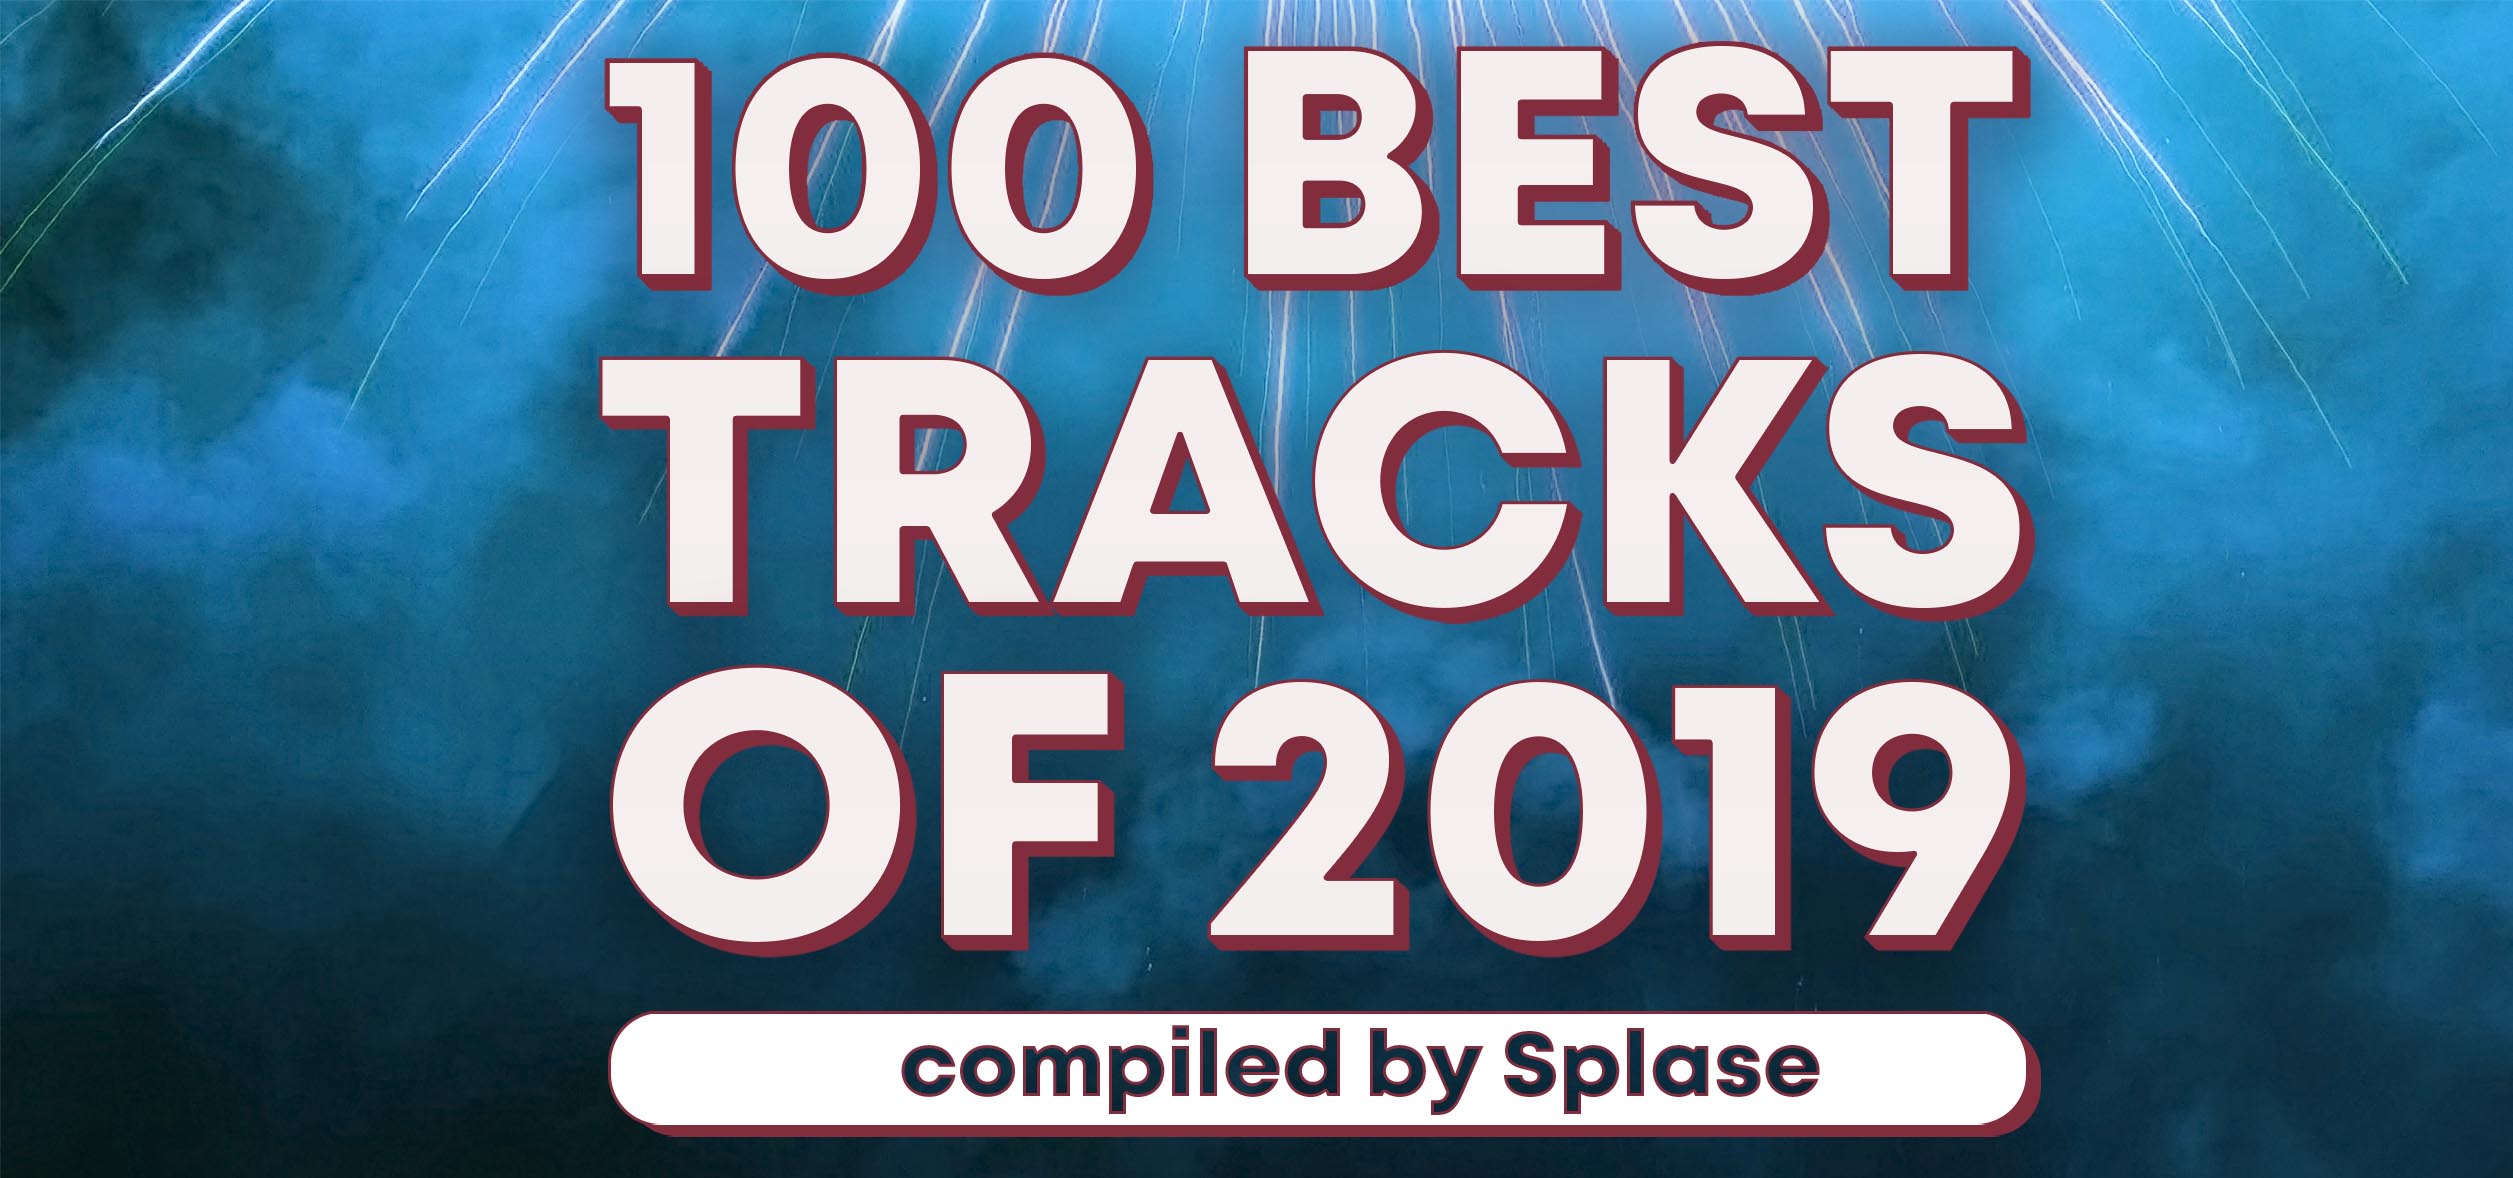 100 Лучших треков 2019 года / 100 Best Tracks of 2019 by Splase